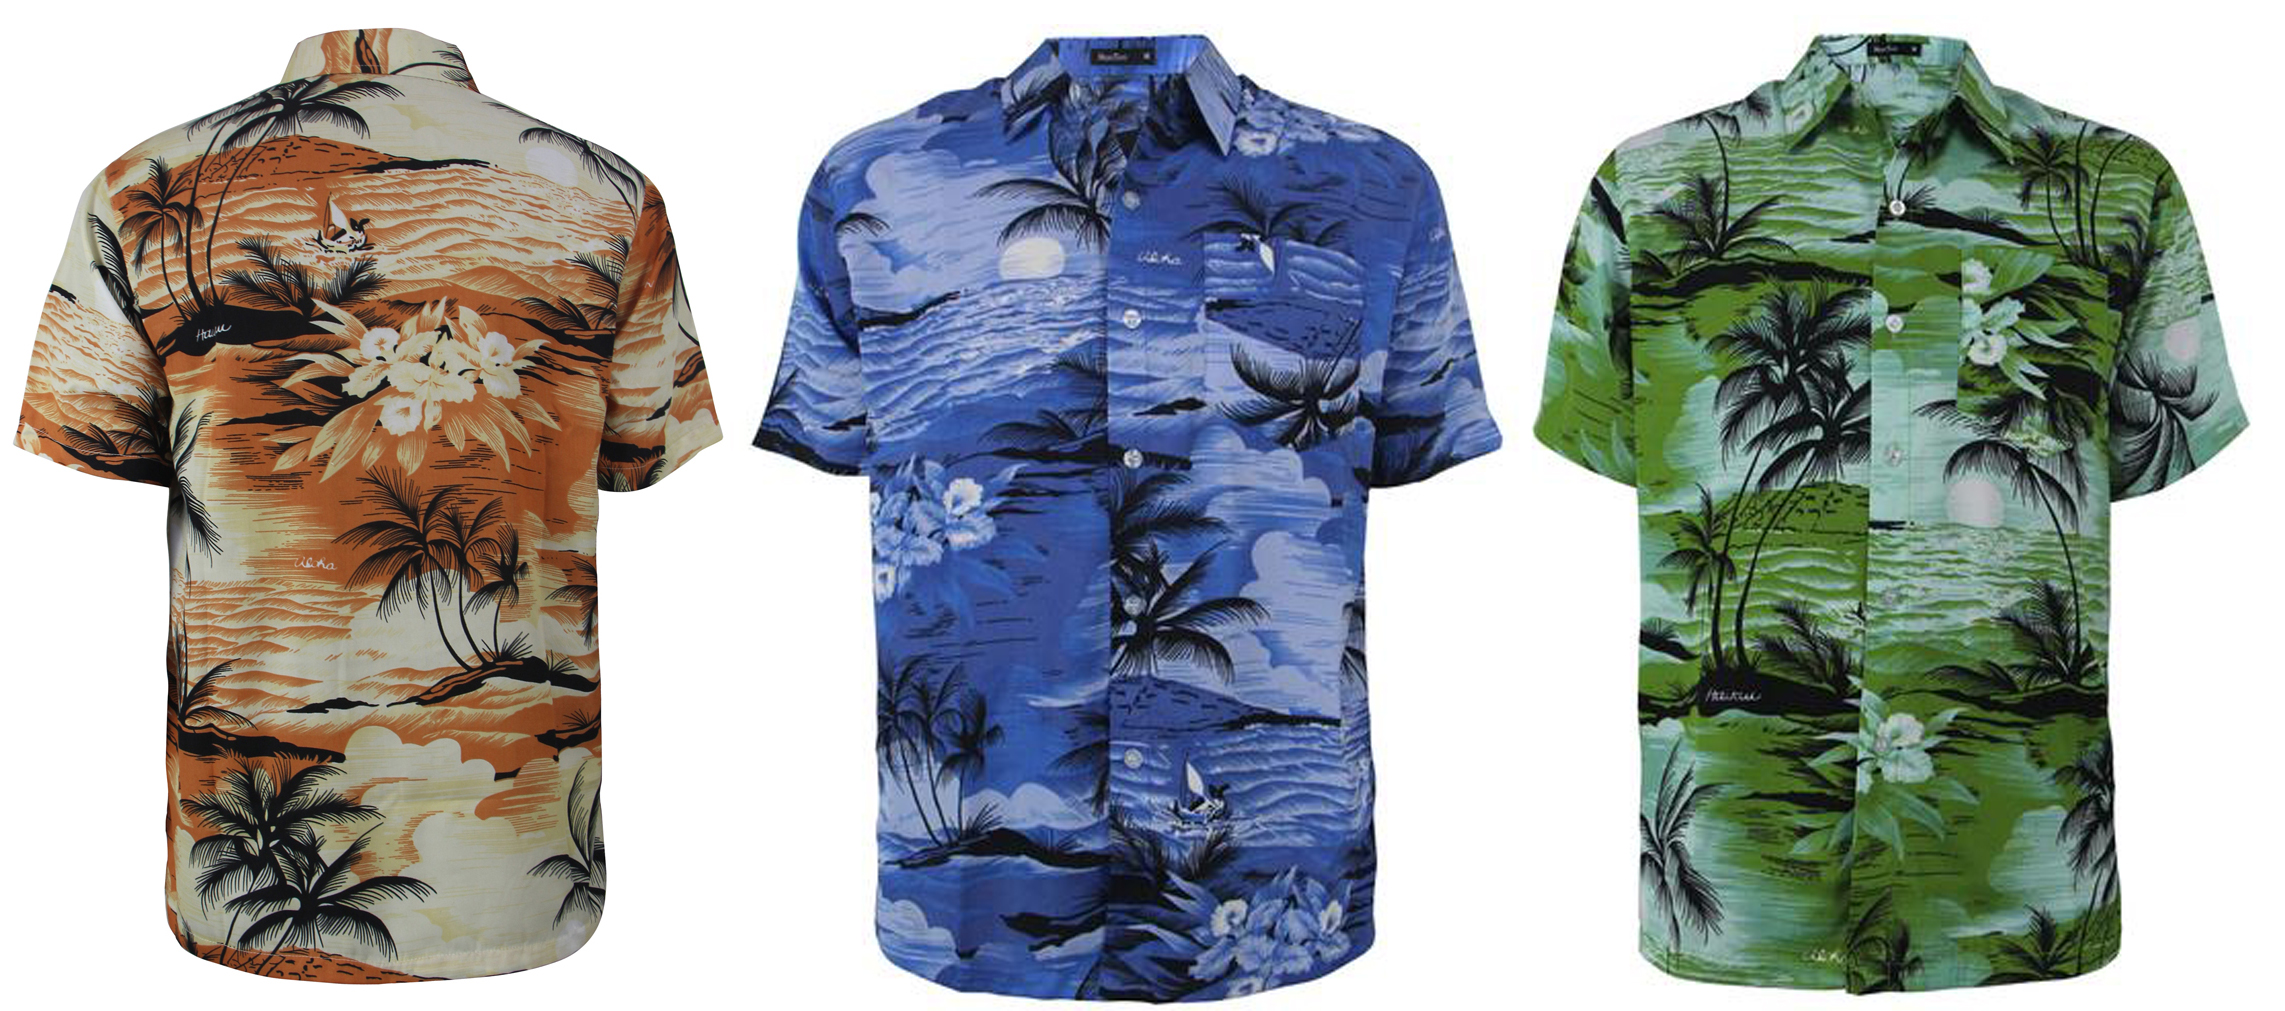 Men's Hawaiian SHIRTs w/ Front Pocket - Palm Tree Prints - Sizes Small-2X